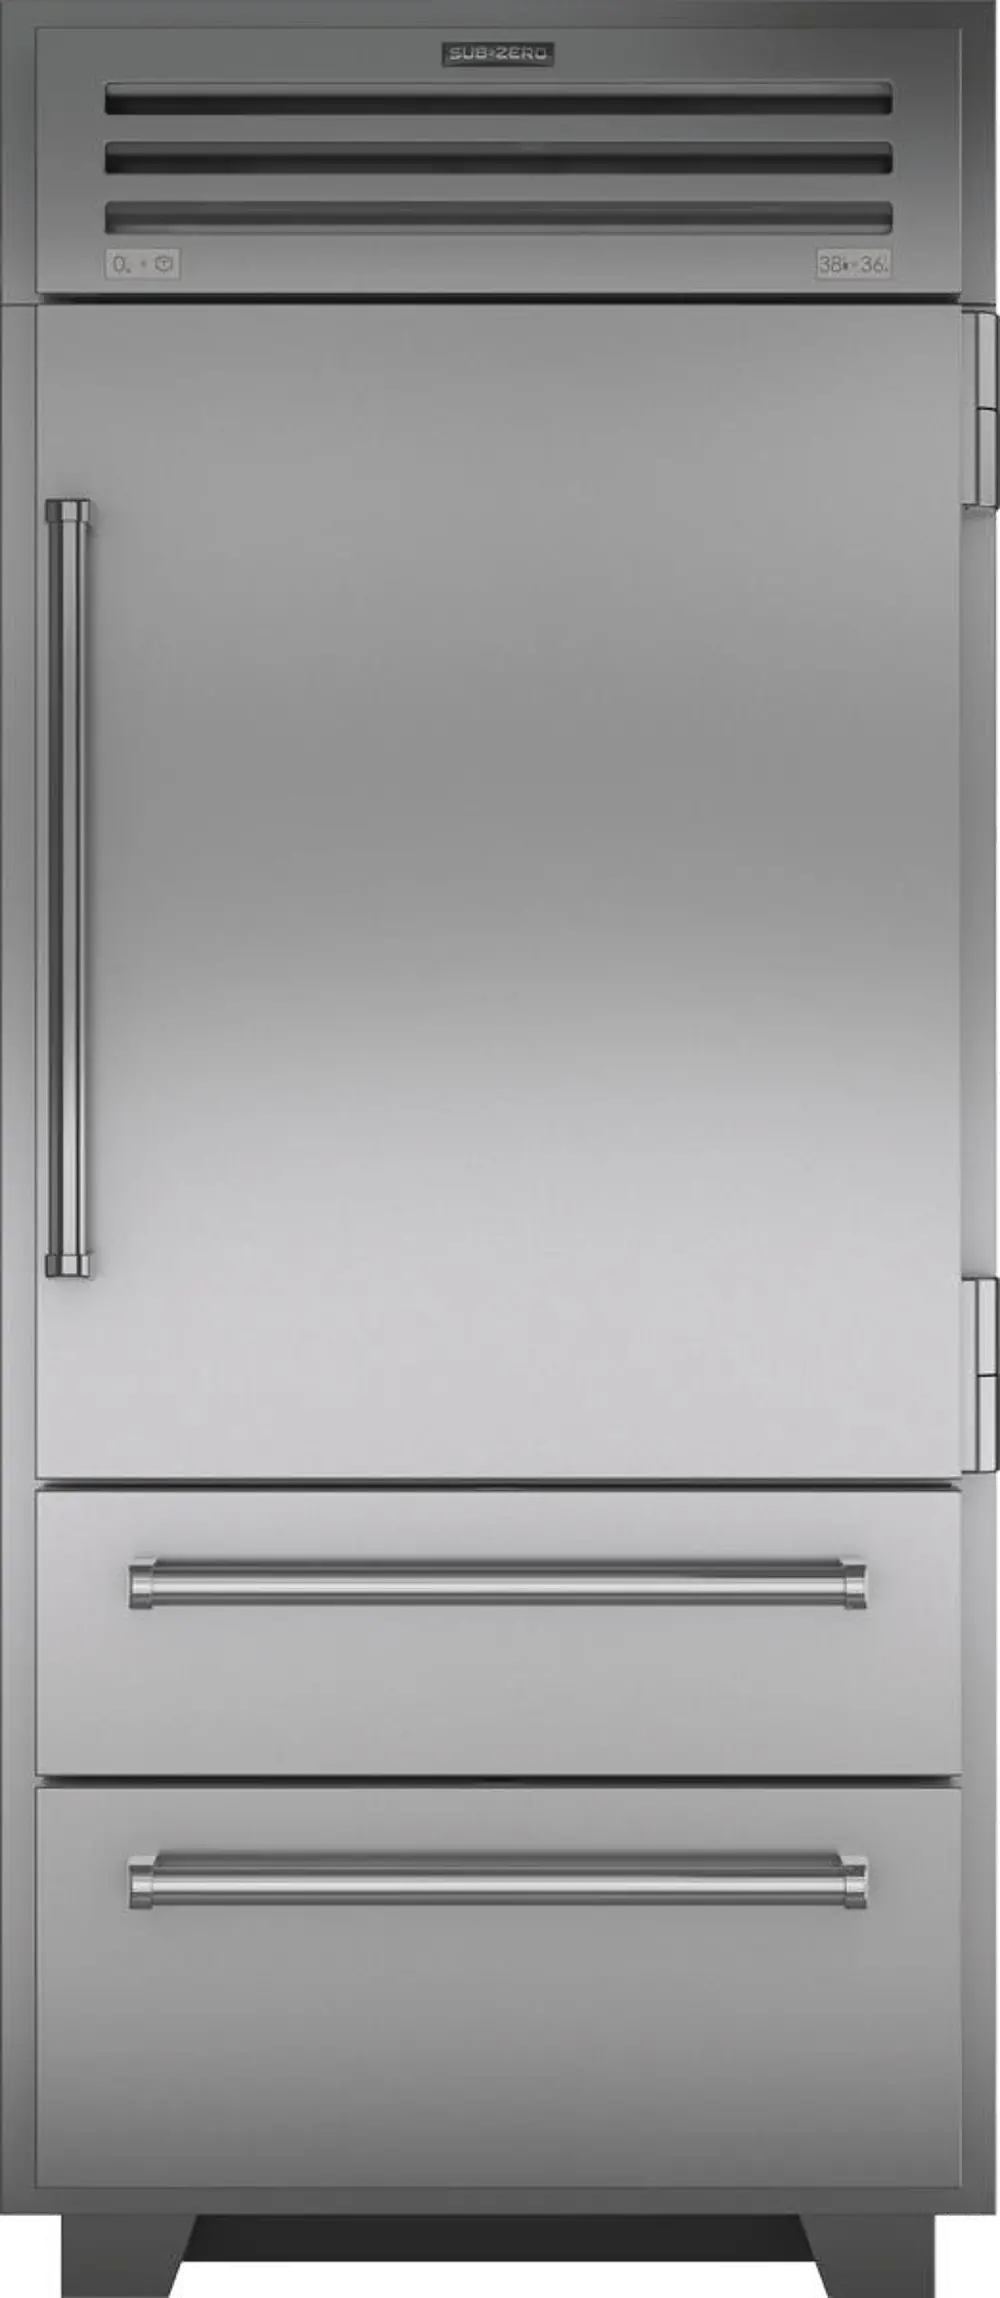 PRO3650/RH Sub-Zero 36 Inch Professional Bottom Freezer Refrigerator - Right Hinge-1